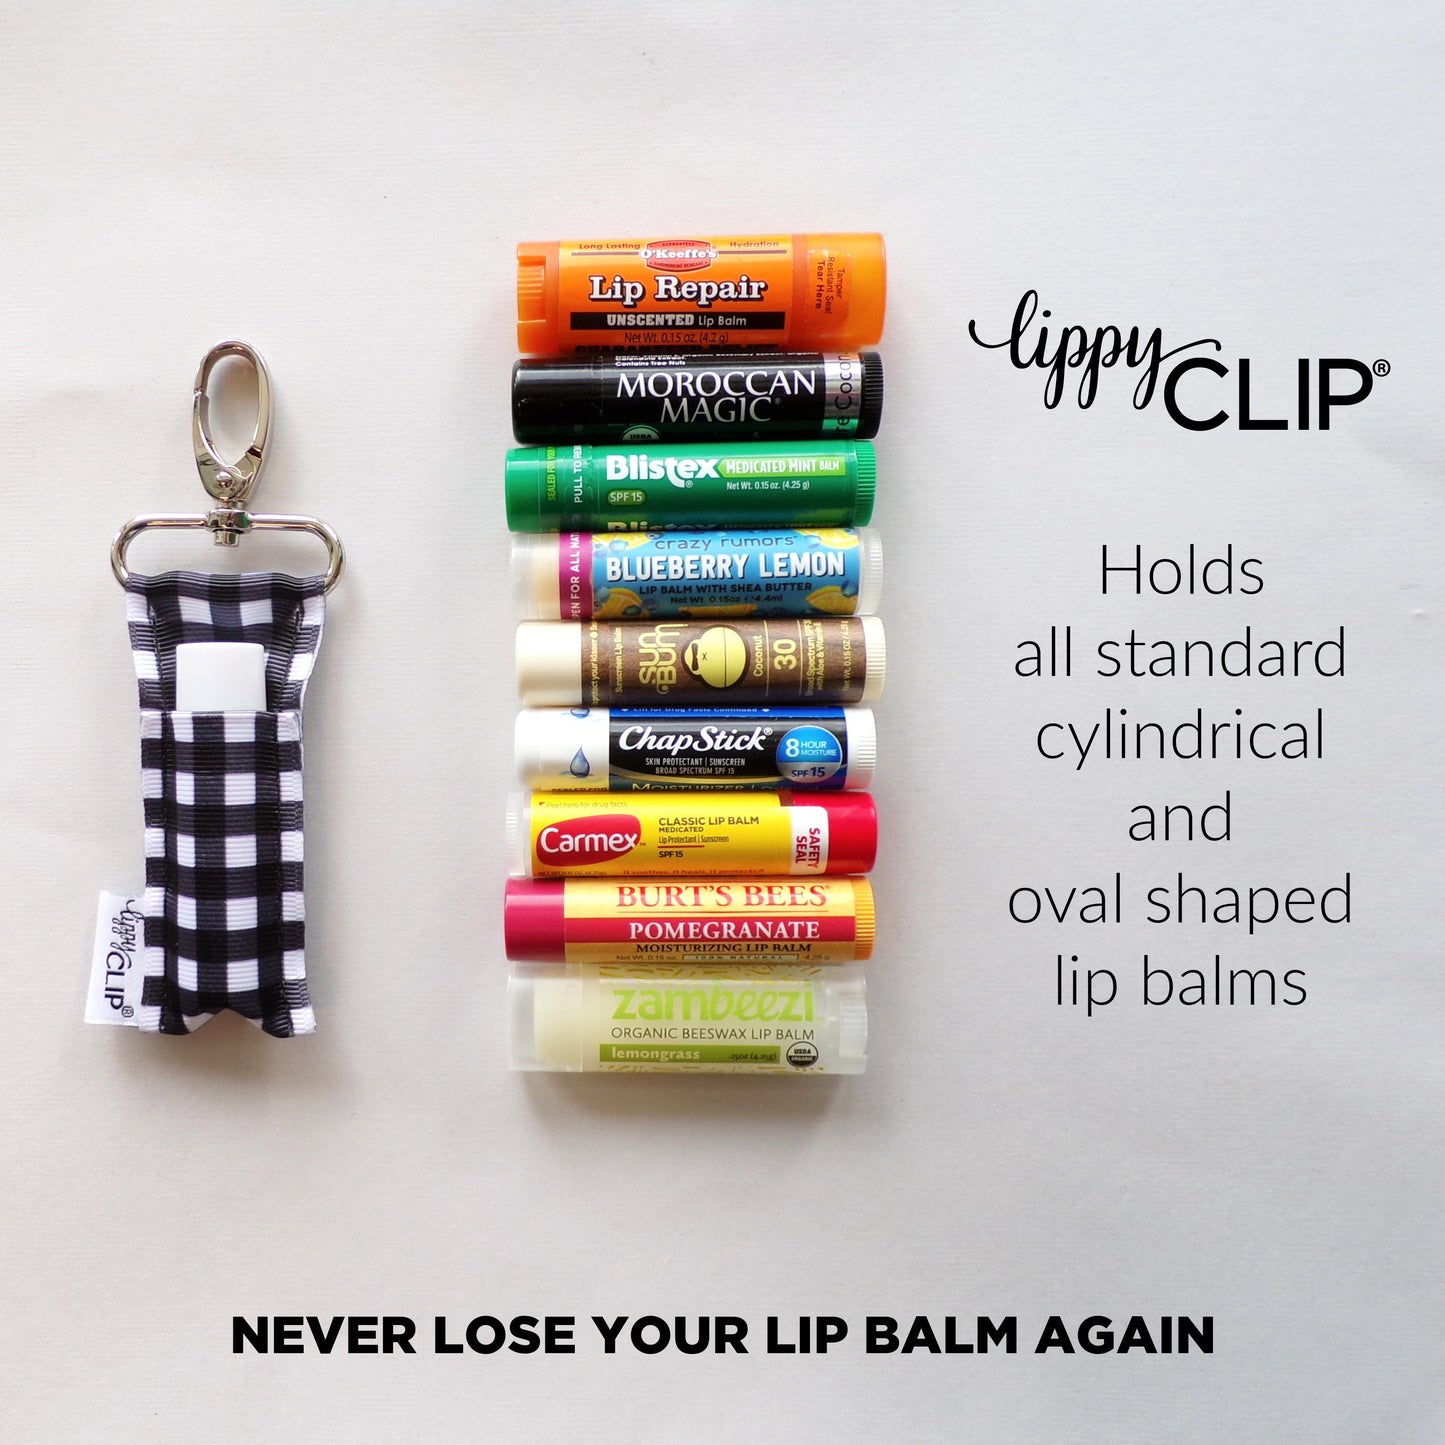 Golden Geometric LippyClip® Lip Balm Holder